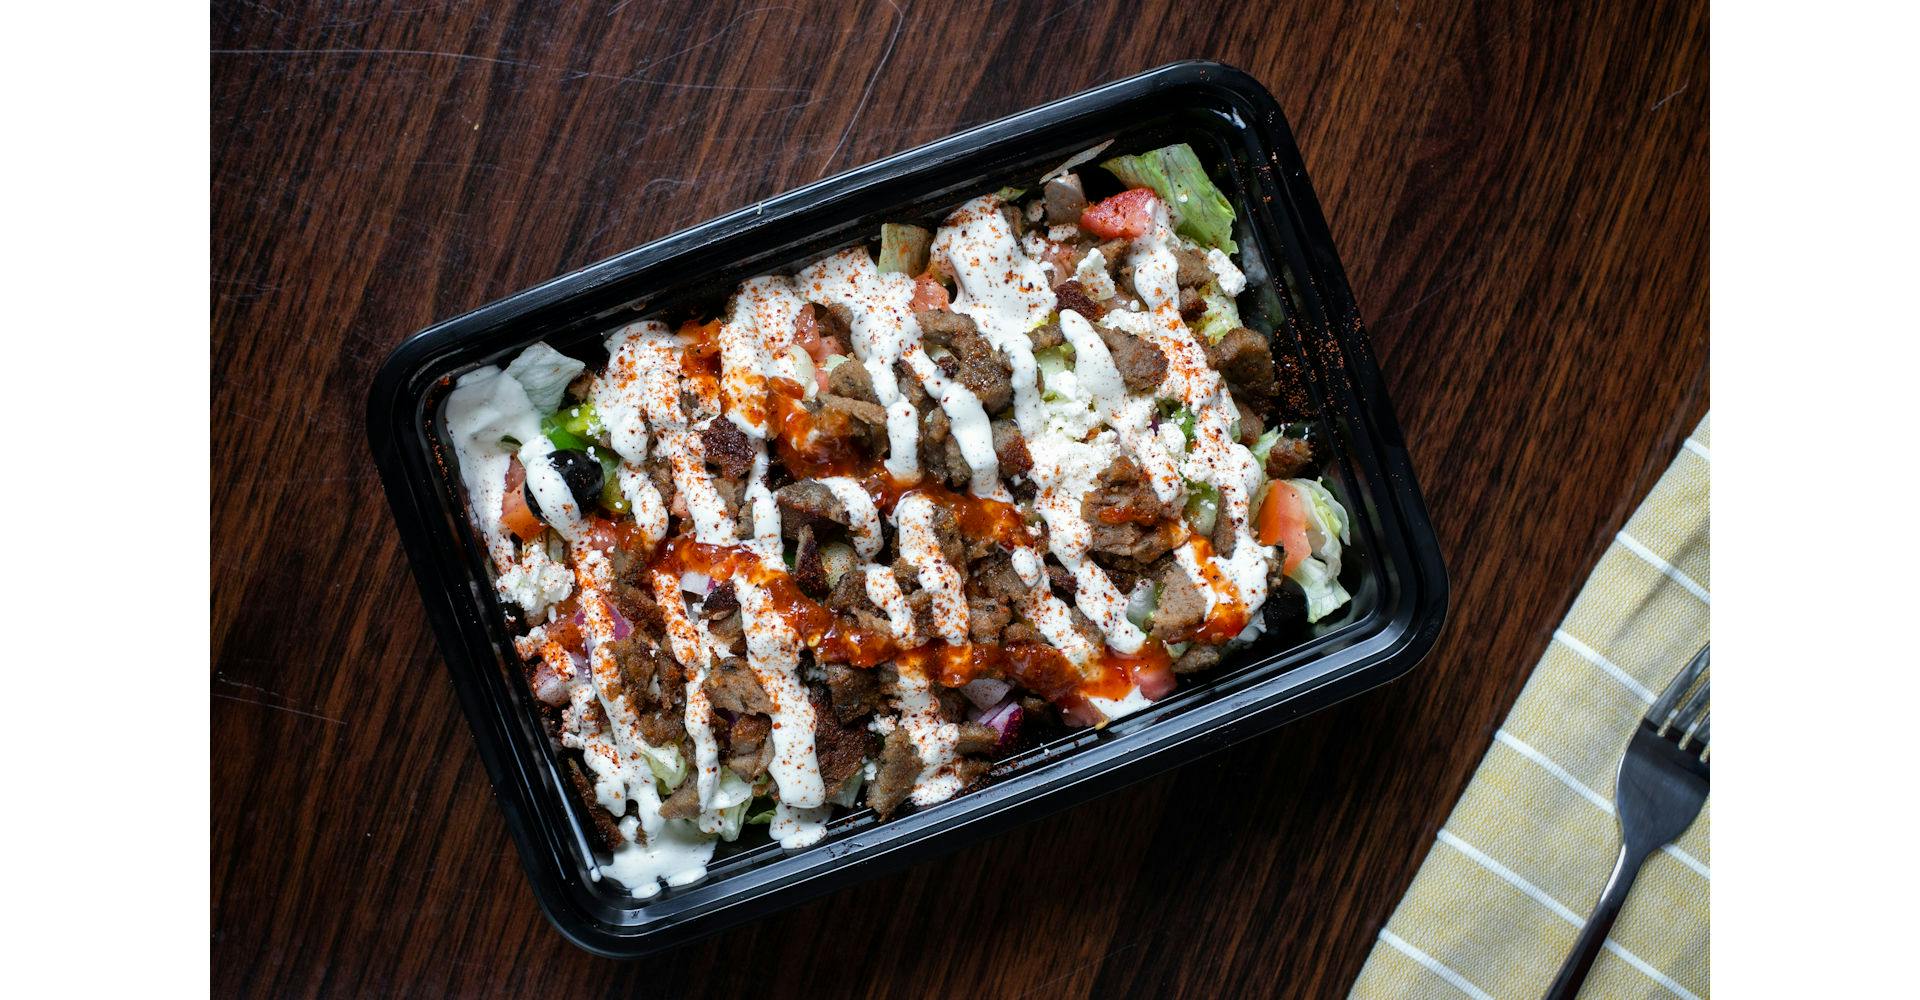 Gyro Salad from Austin's Habibi - W 5th St in Austin, TX